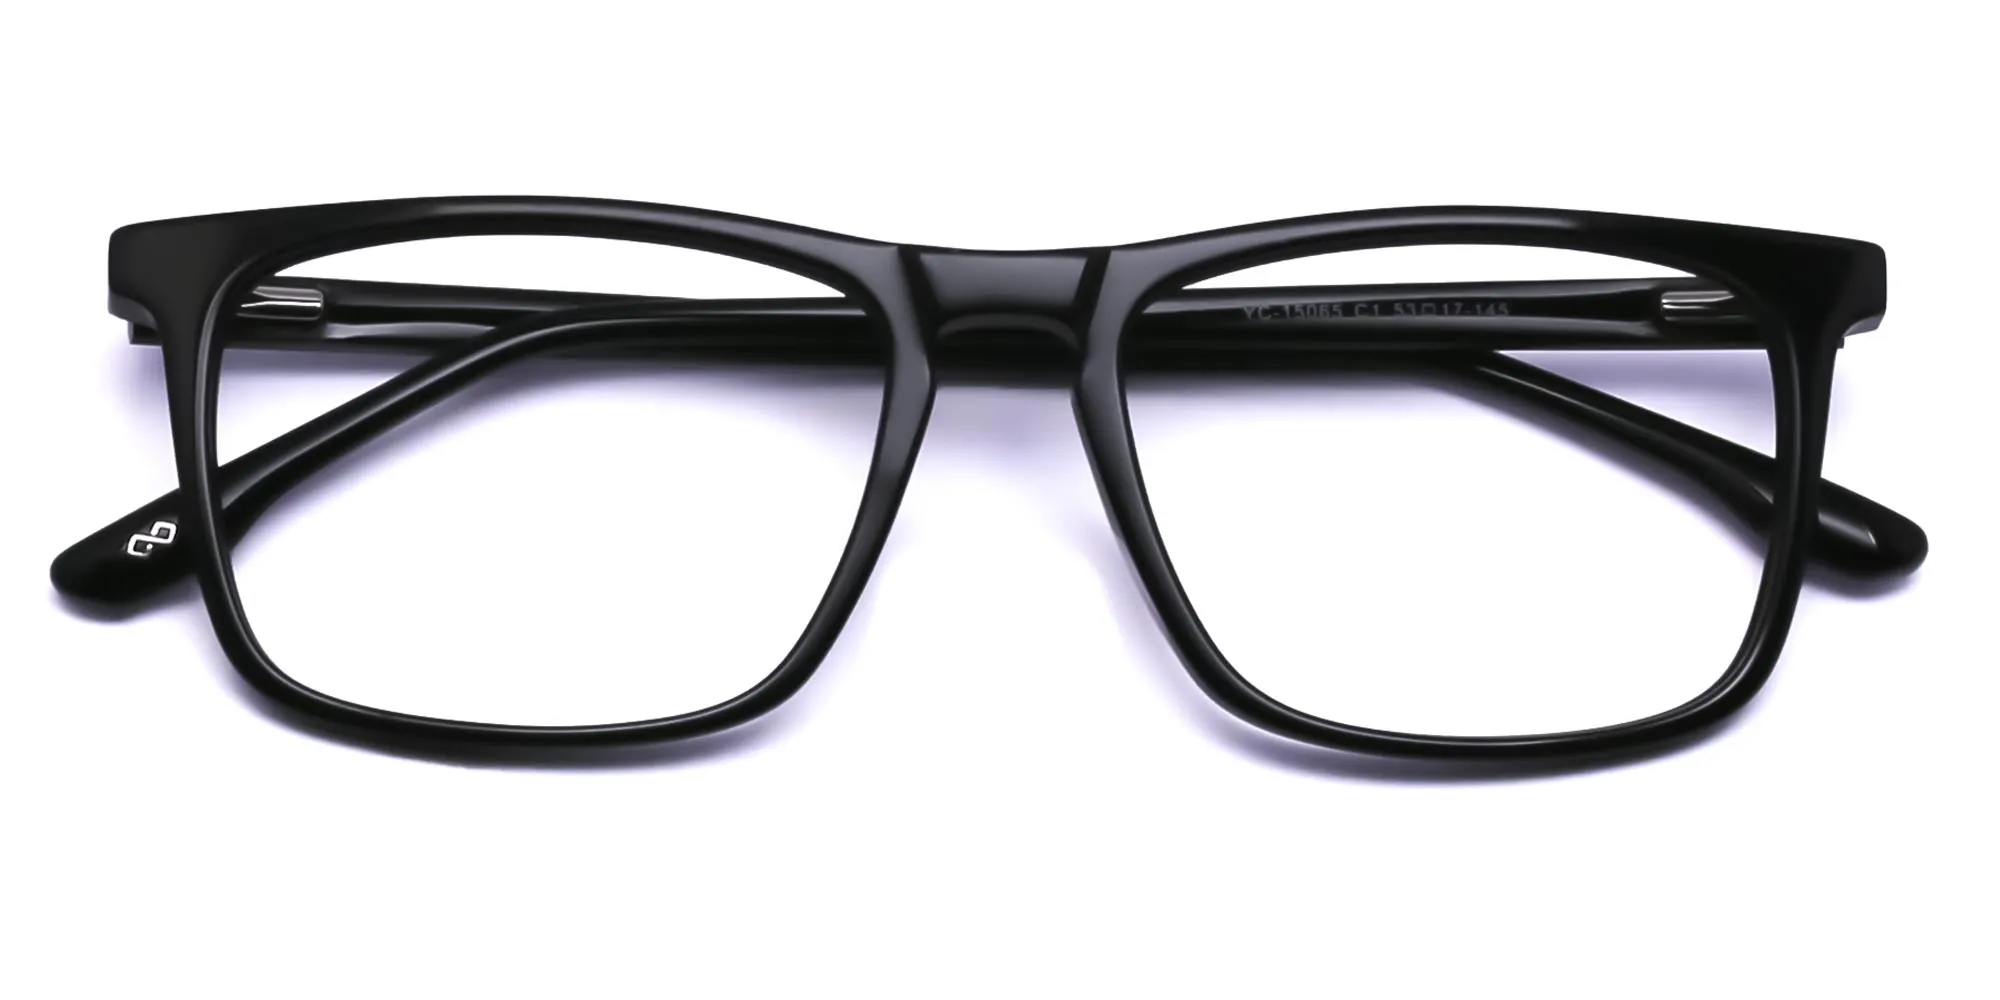 HAMPSTEAD 1 - Black Computer Glasses | Specscart.®